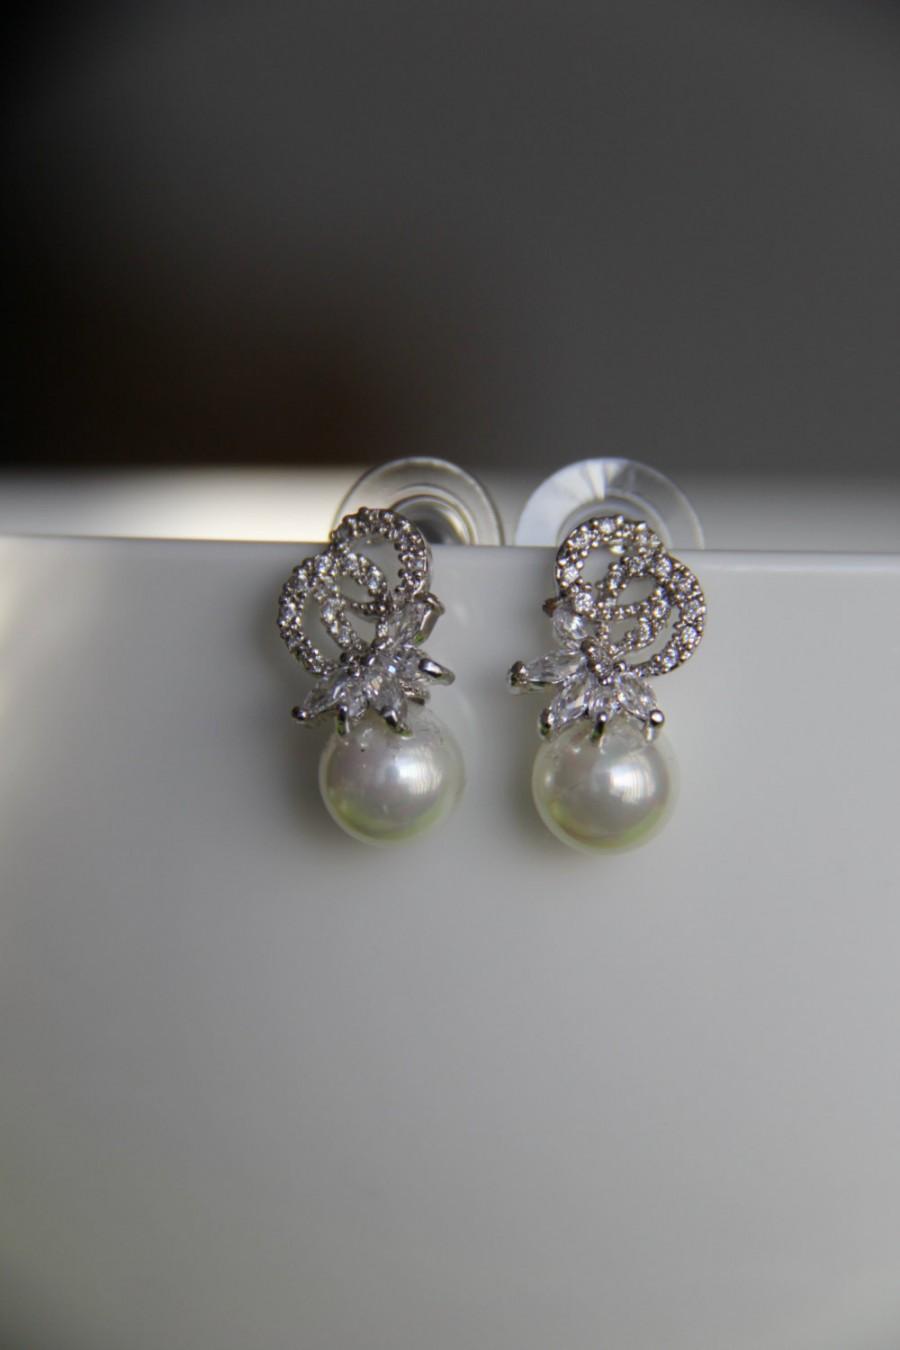 زفاف - Bridal earrings, cz earrings, wedding earrings, bridesmaid earrings, bridal jewelry, wedding jewelry, cz jewelry, dangley earrings